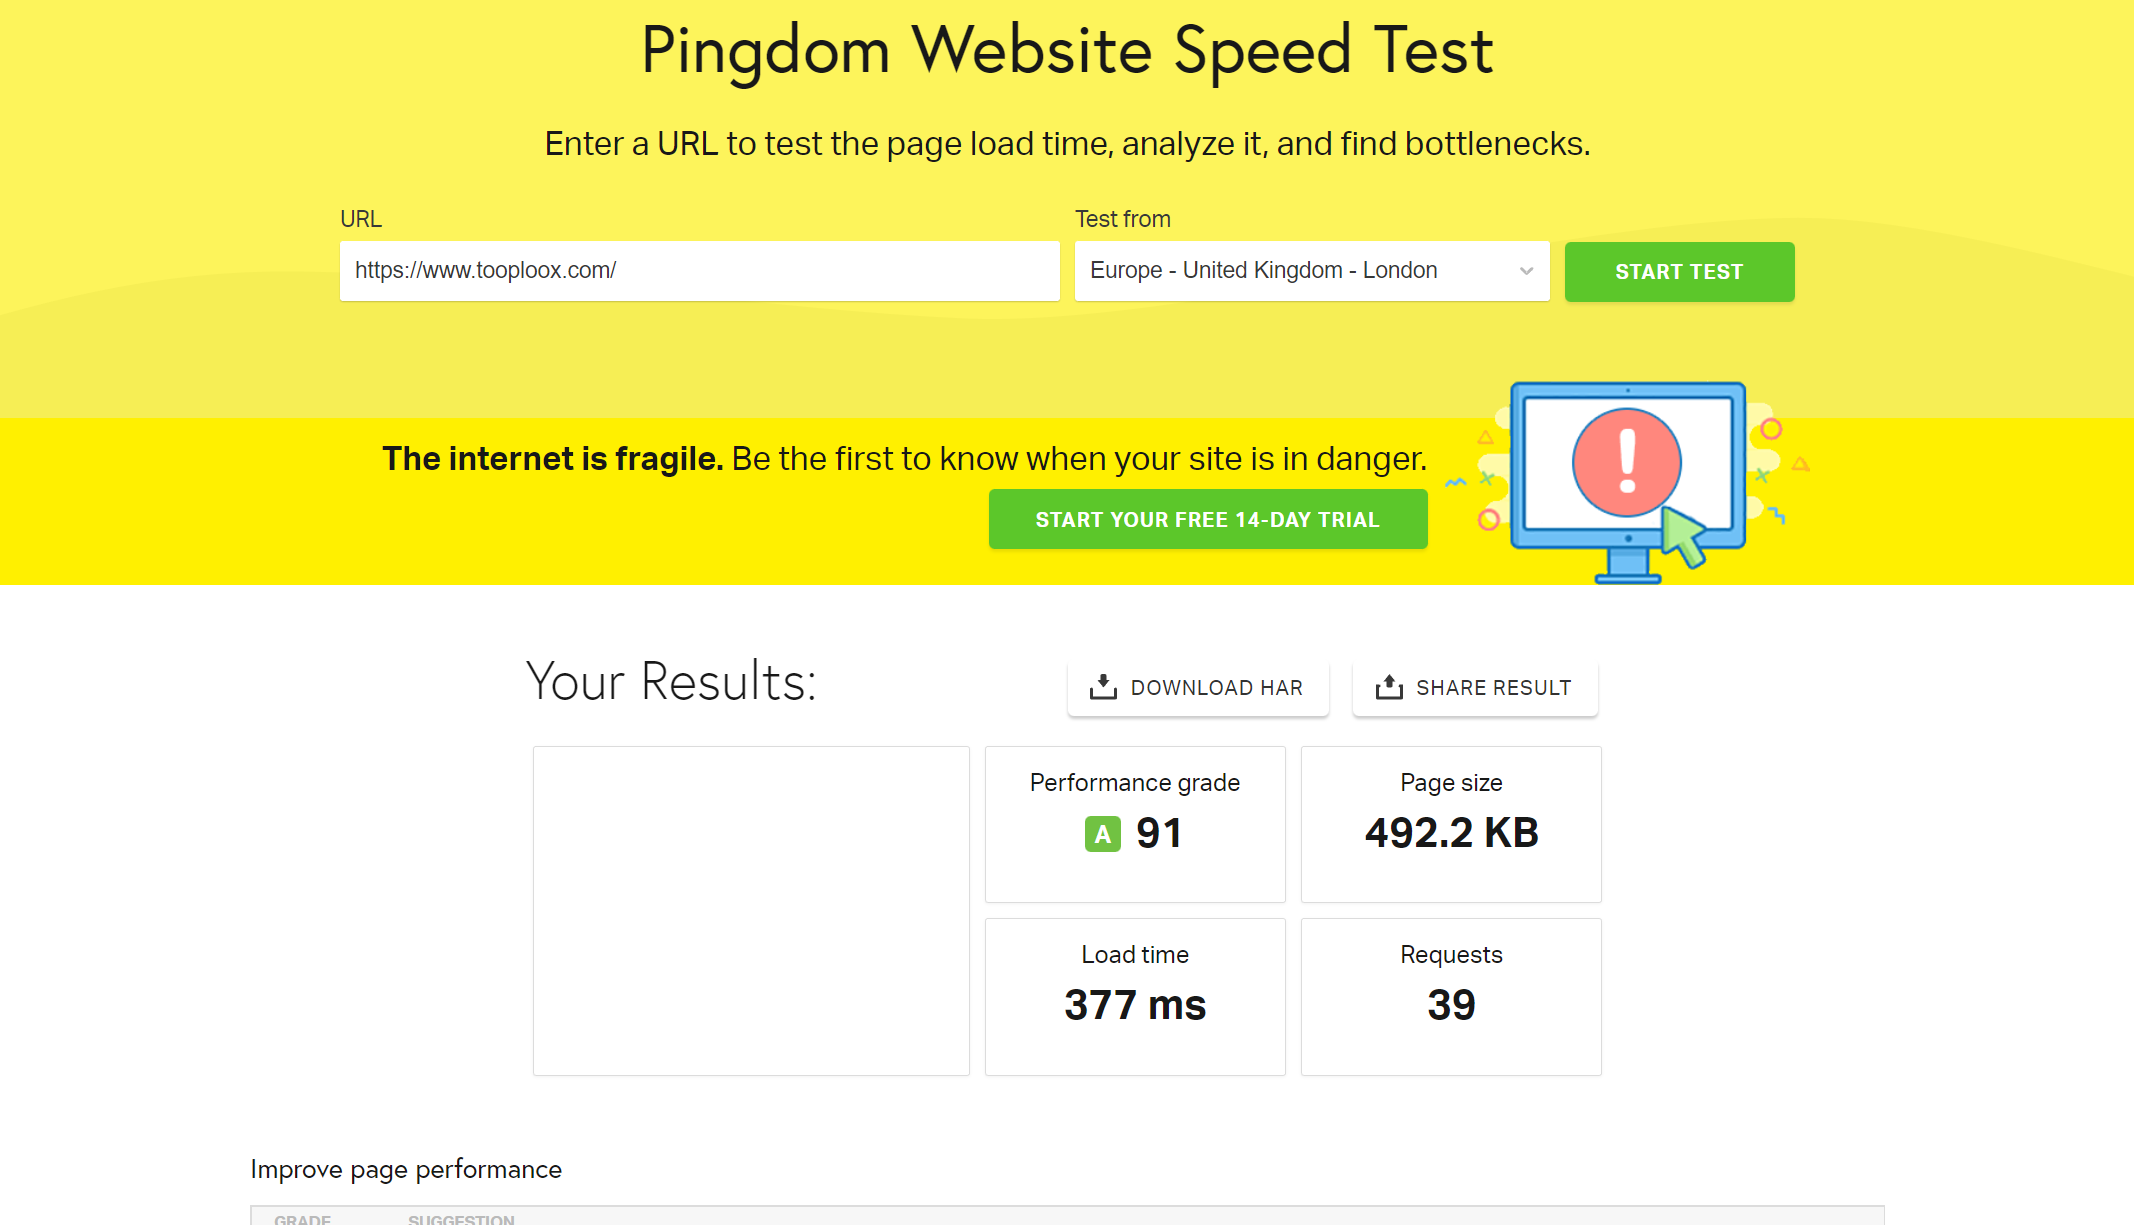 Pingdom website speed test results